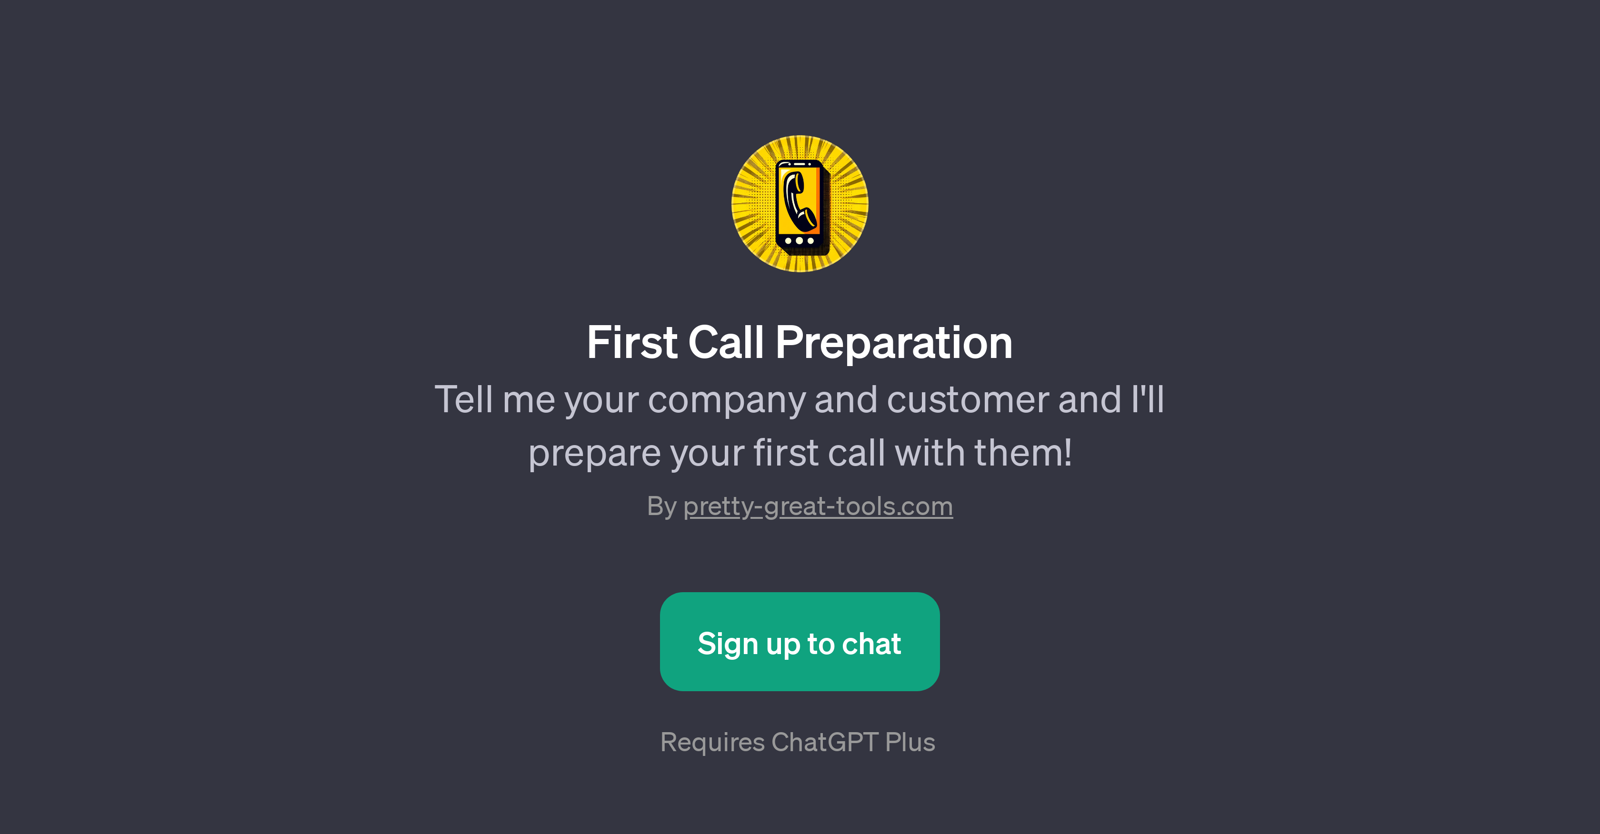 First Call Preparation website